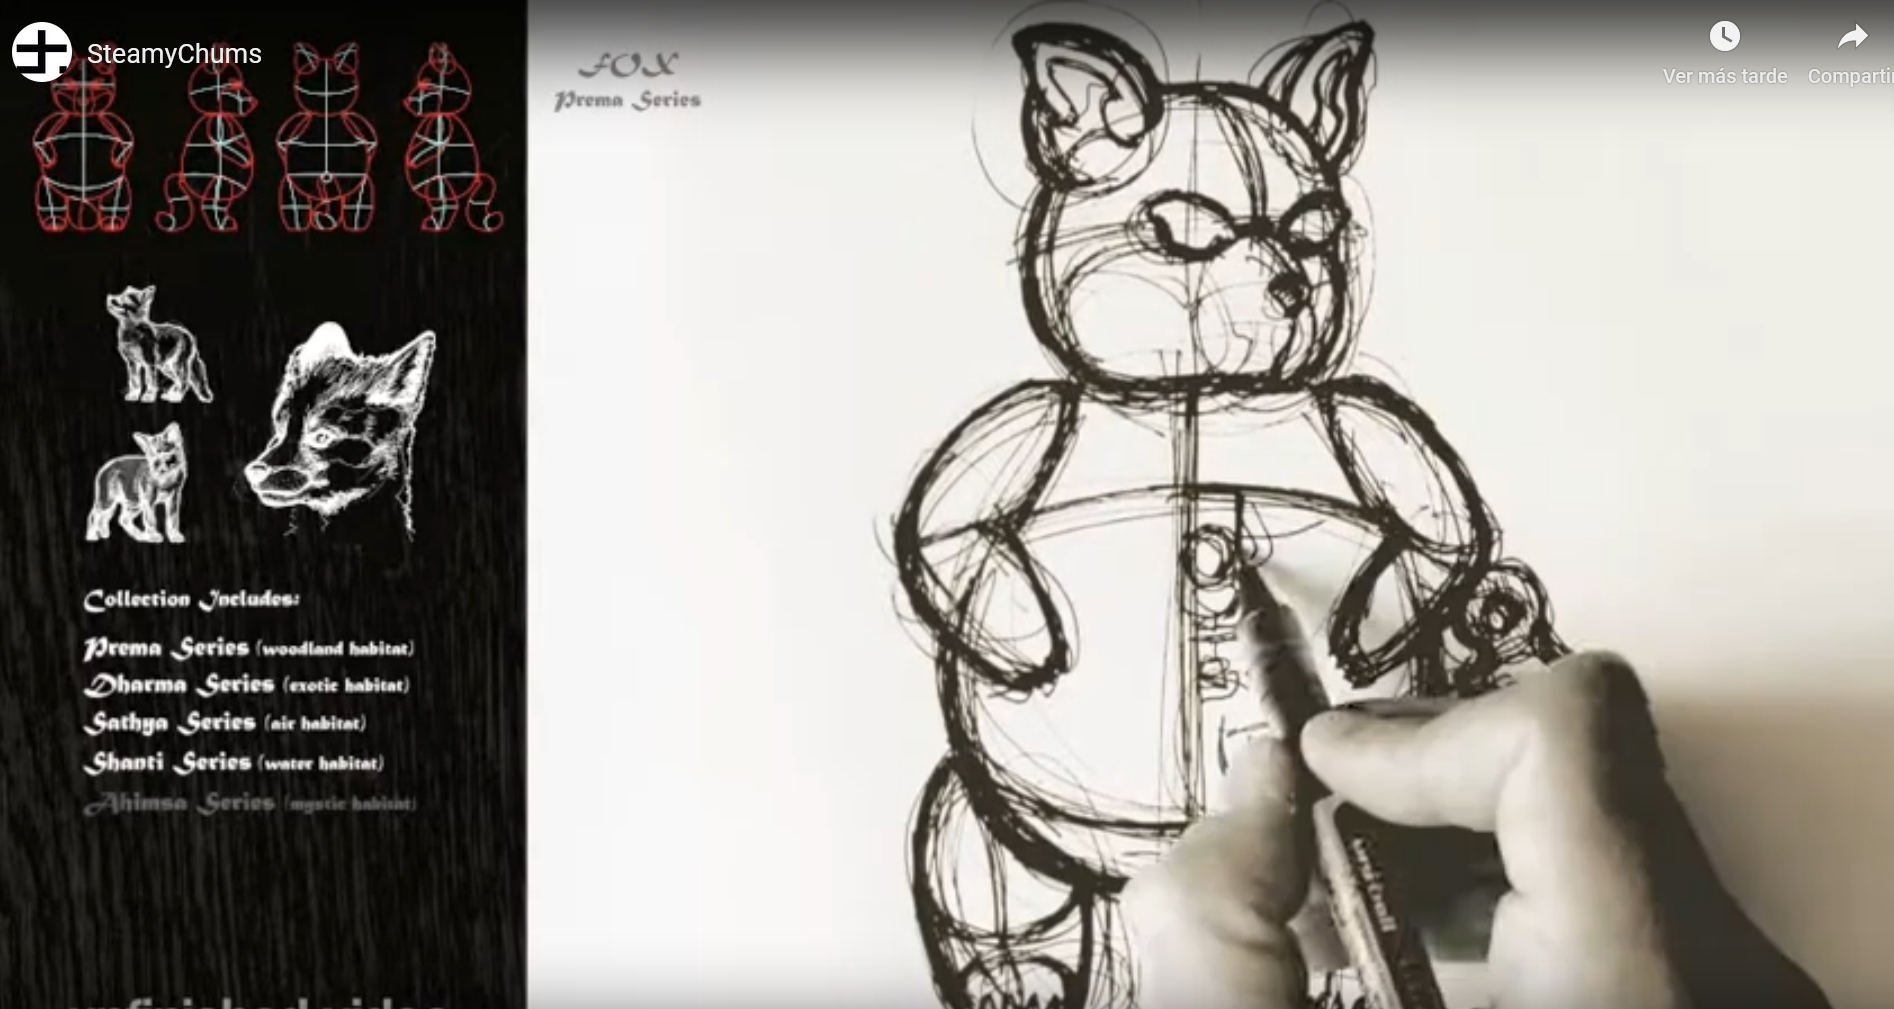 pantalla principal de video, con boceto de un animal